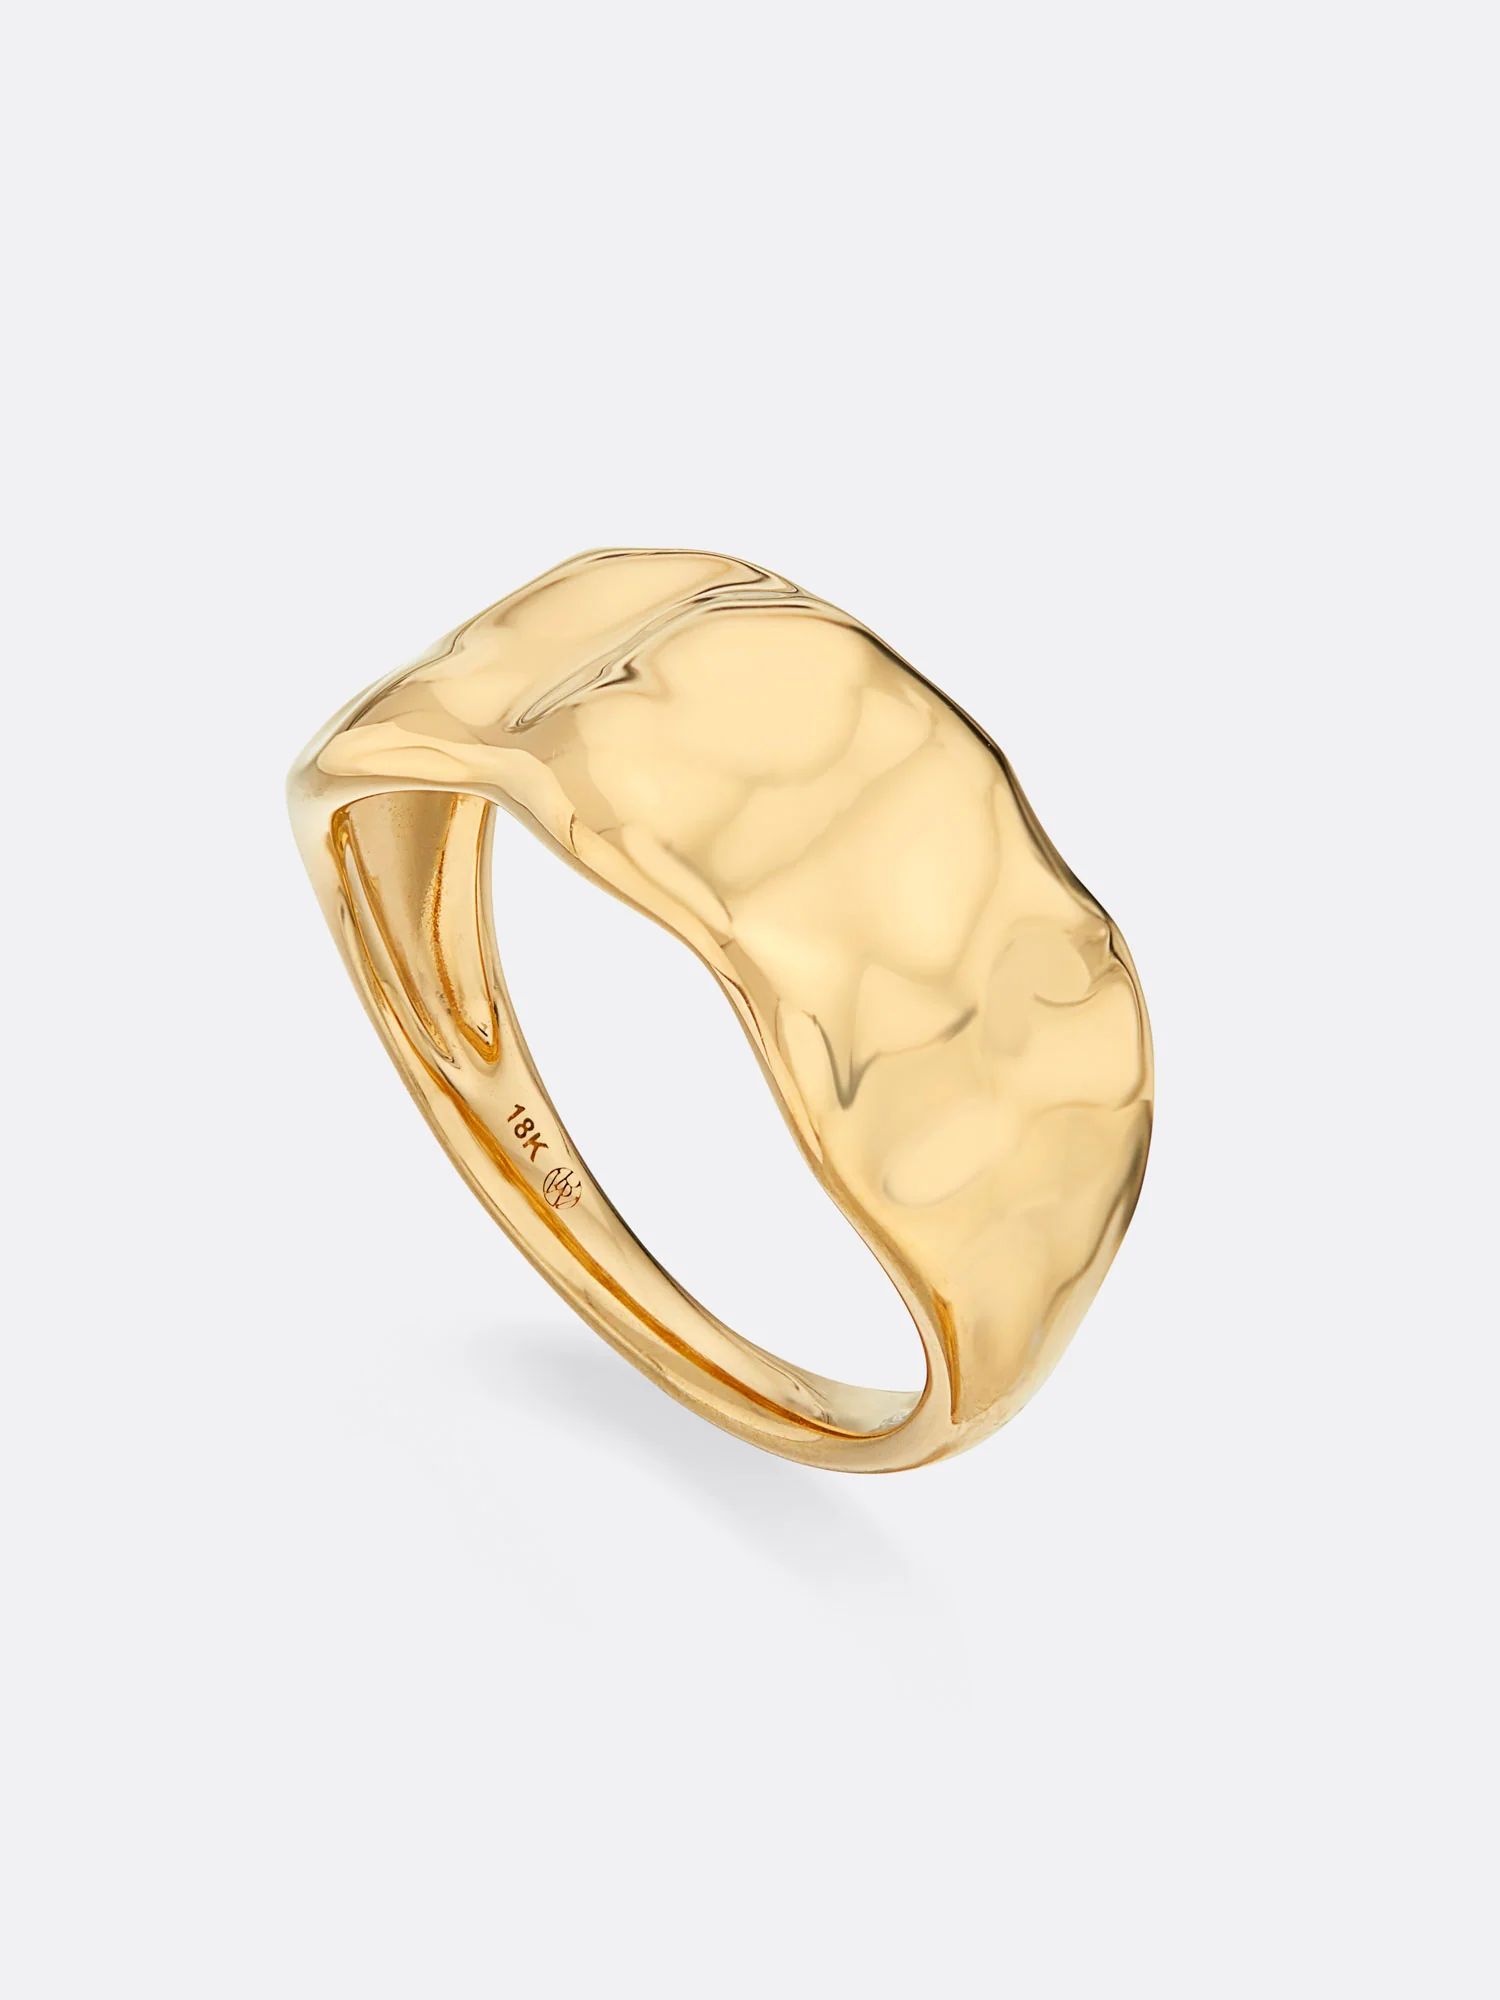 Brochu Walker | Women's Golden Waves Molten Ring in Yellow Gold | Brochu Walker